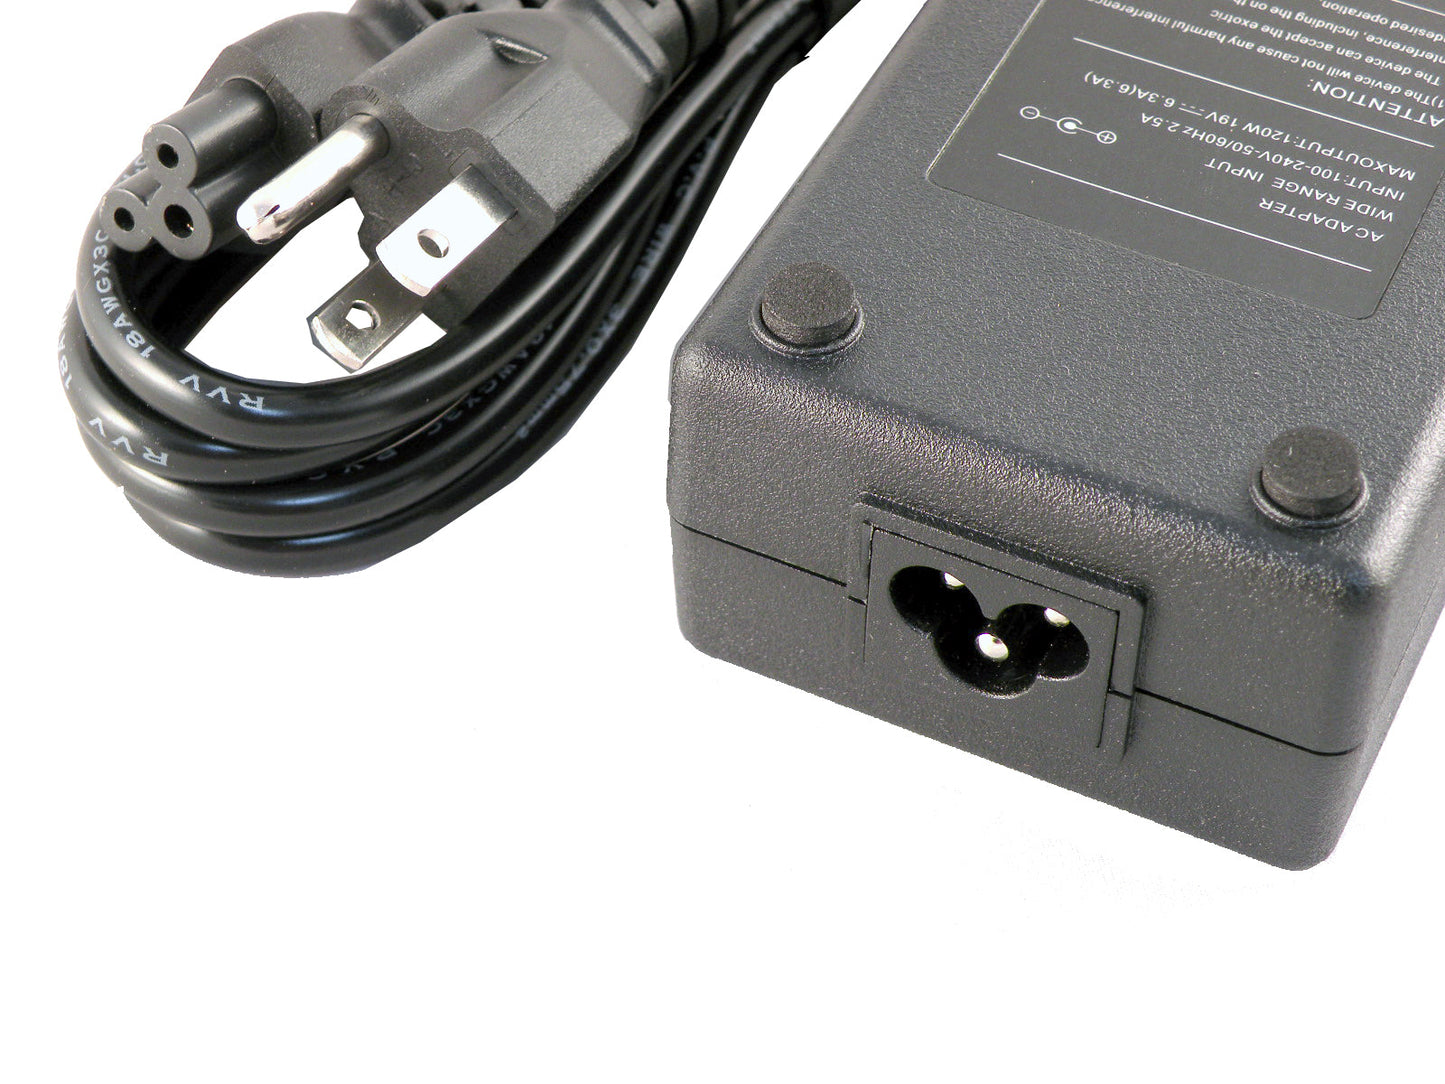 AC power cord plug